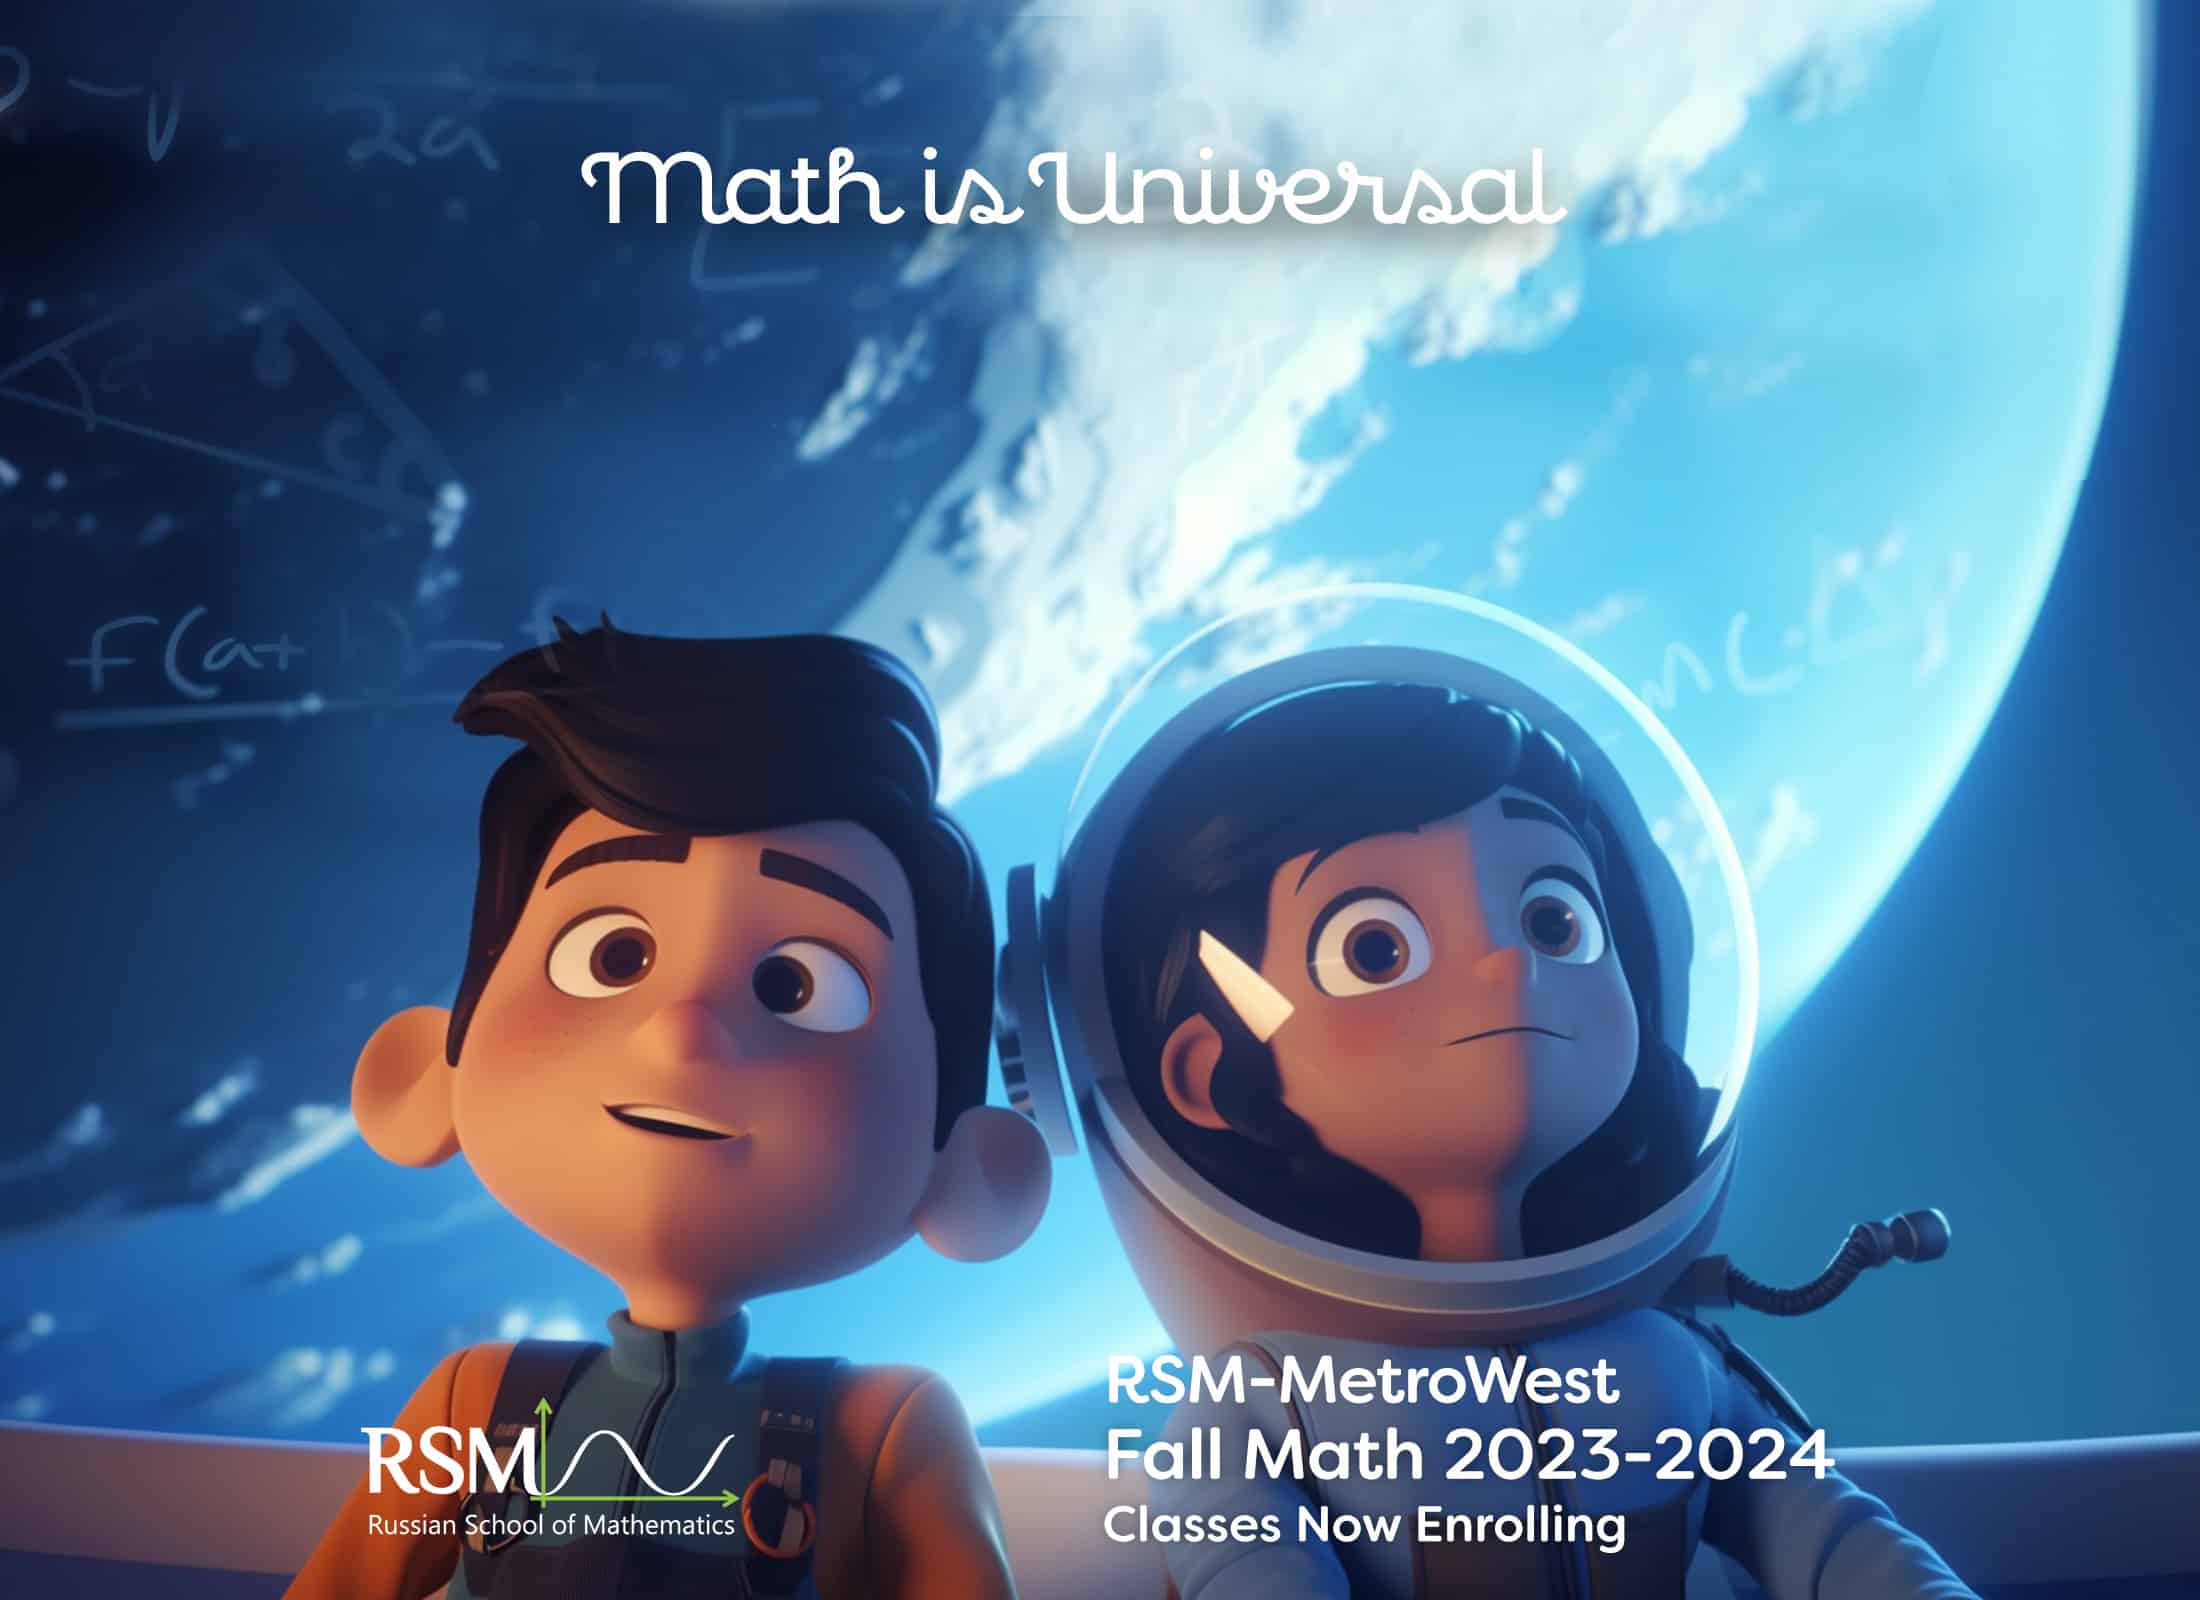 fall math classes 2021, fall math, fall math 2021, fall math framingham, fall math programs